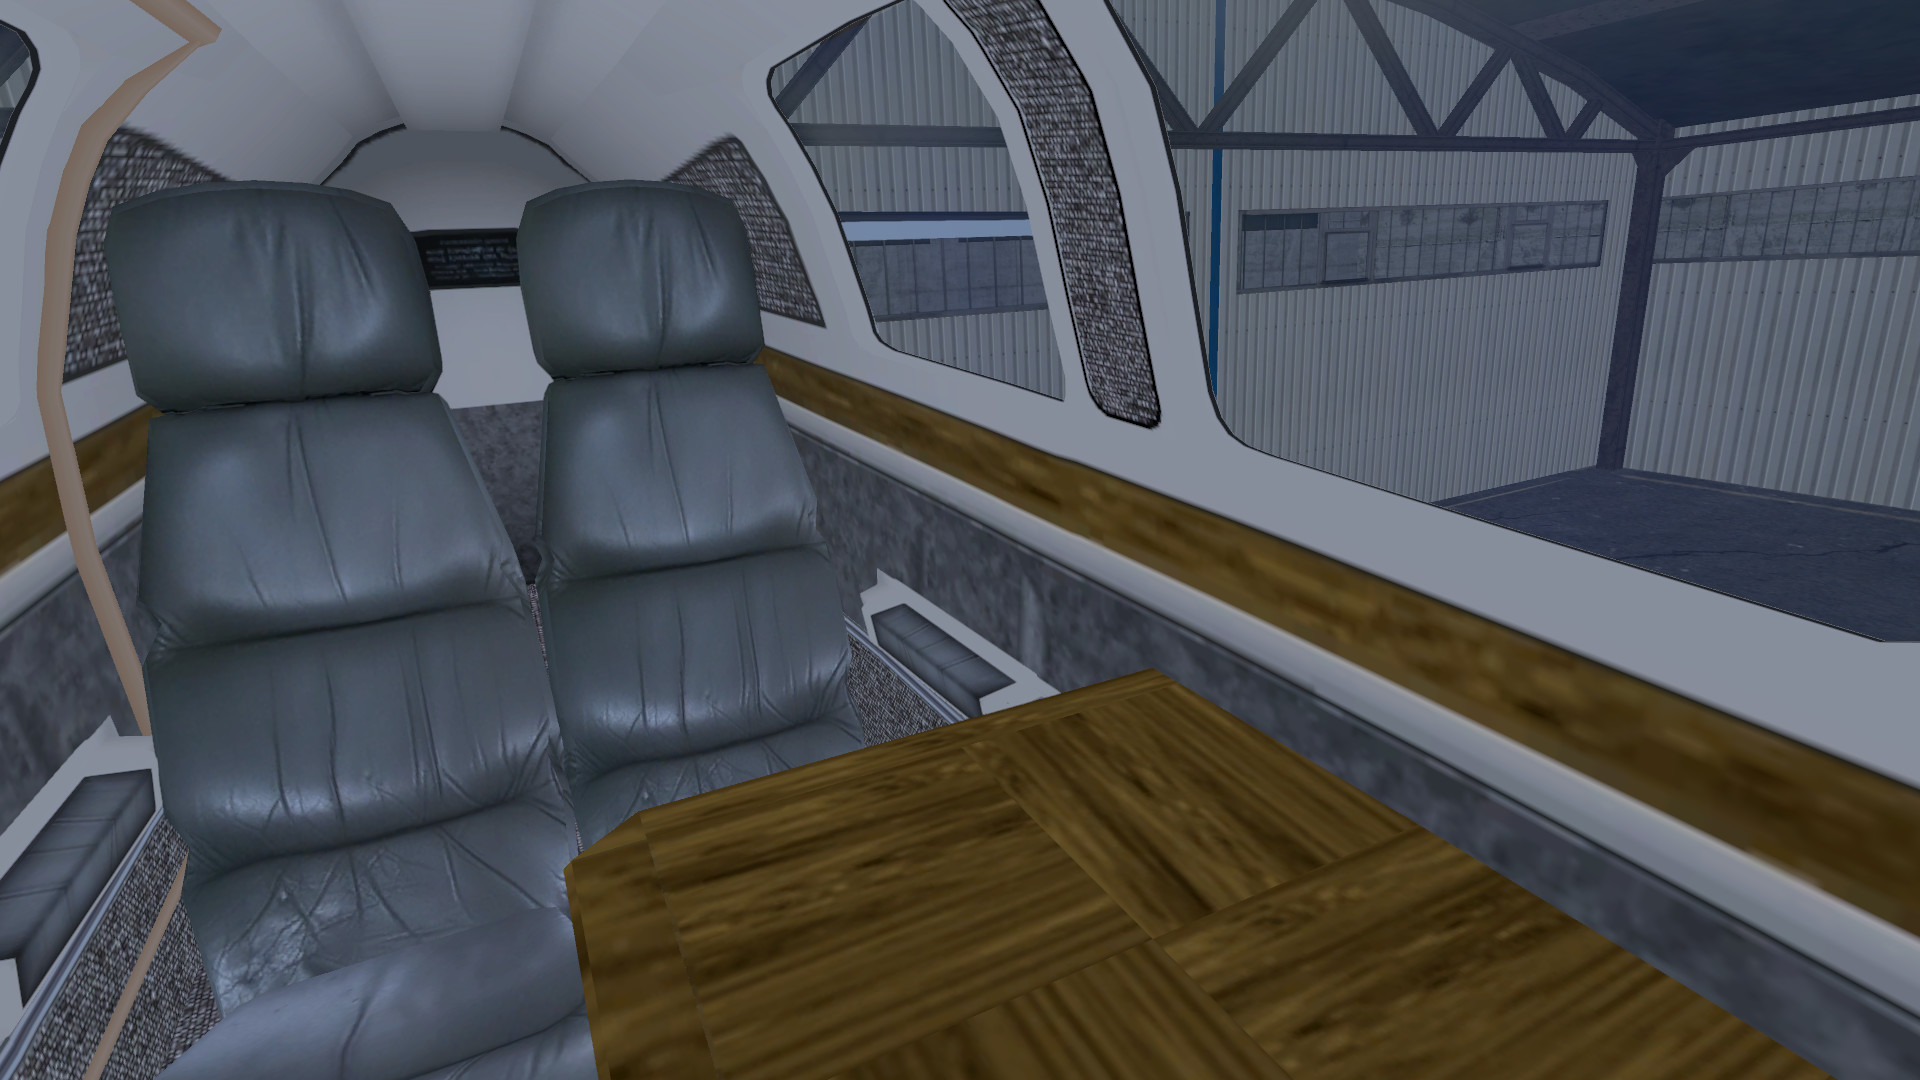 Flight Simulator: VR screenshot